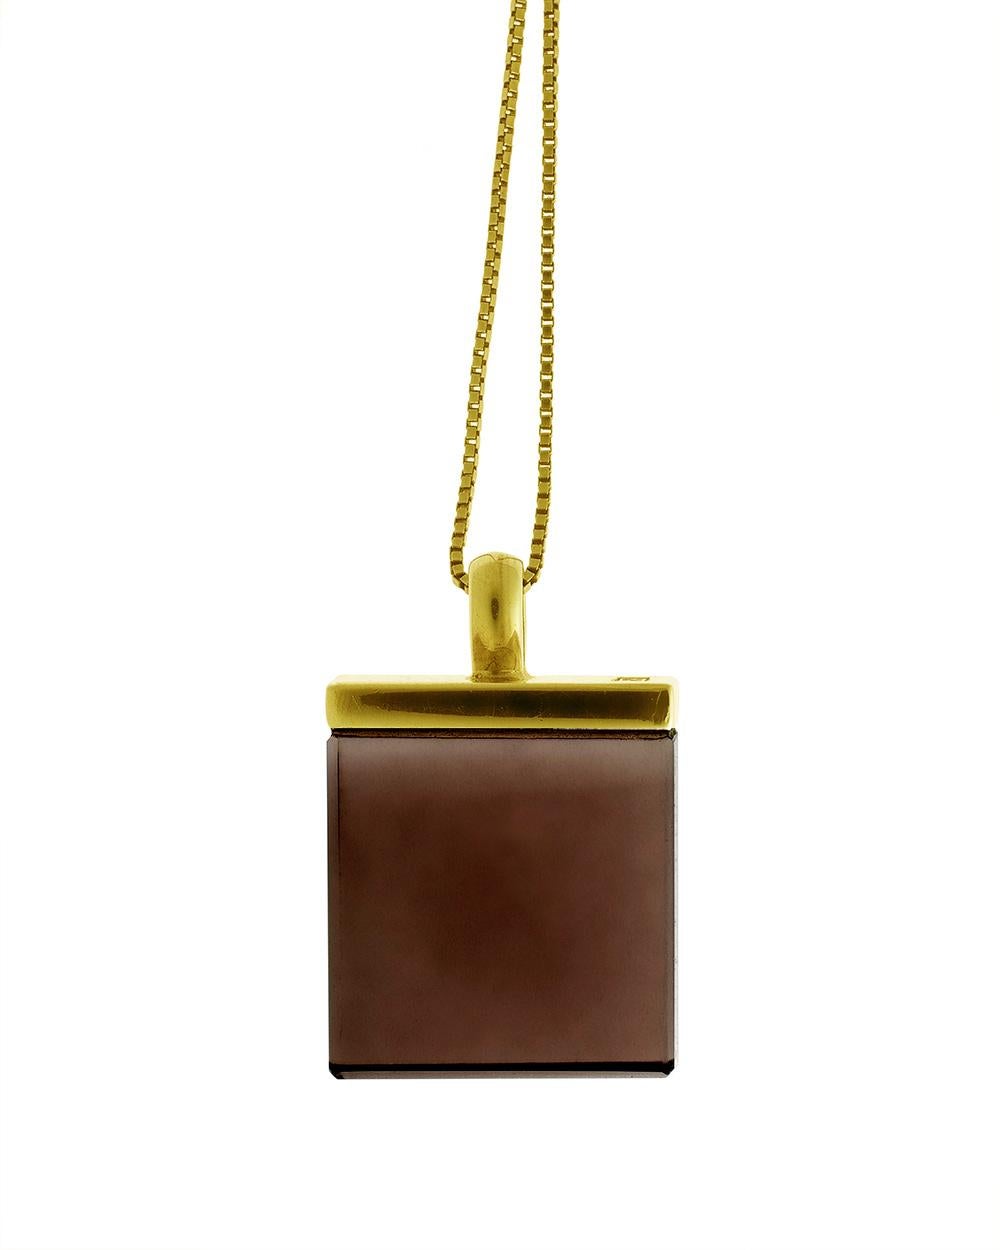 Eighteen Karat Yellow Gold Contemporary Pendant Necklace with Smoky Quartz For Sale 2